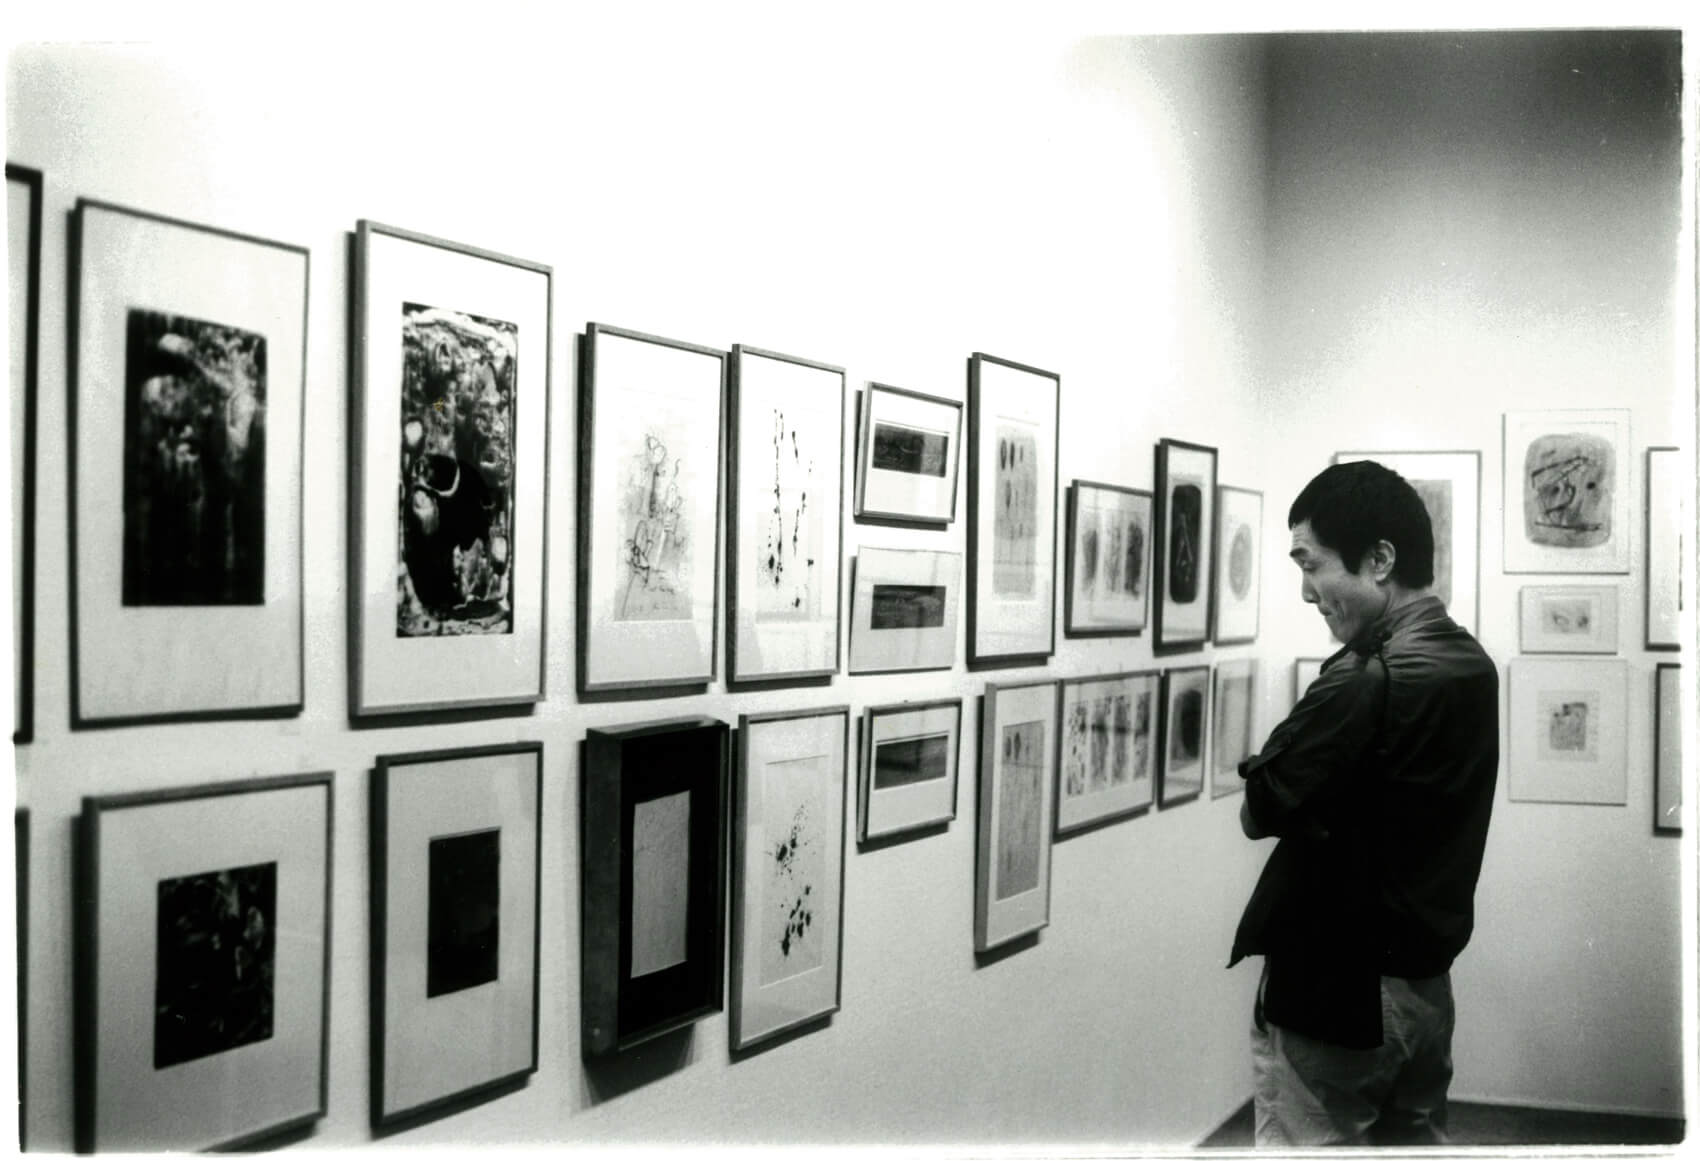 Genpei Akasegawa at the exhibition. Photo by Atsuhiko Shima